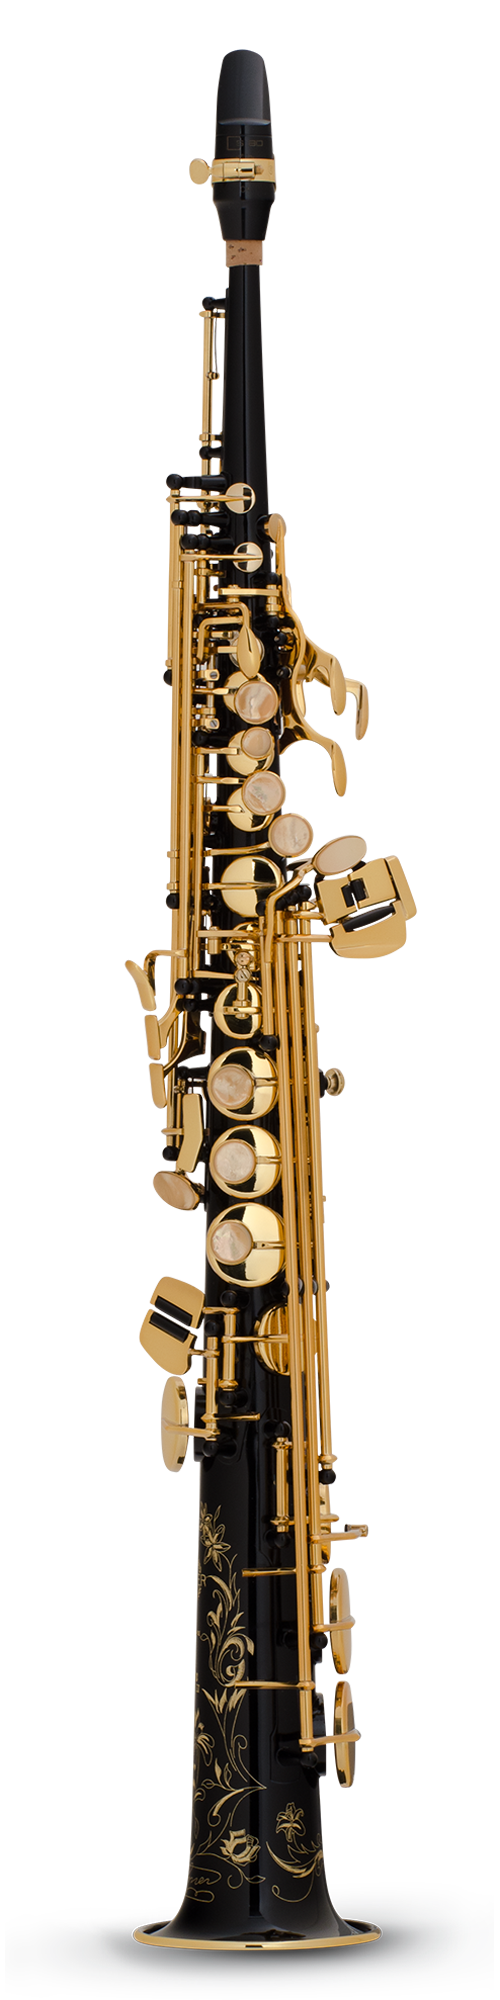 Selmer Paris “Series II” Jubilee Edition 51JBL Soprano Saxophone Black Lacquer